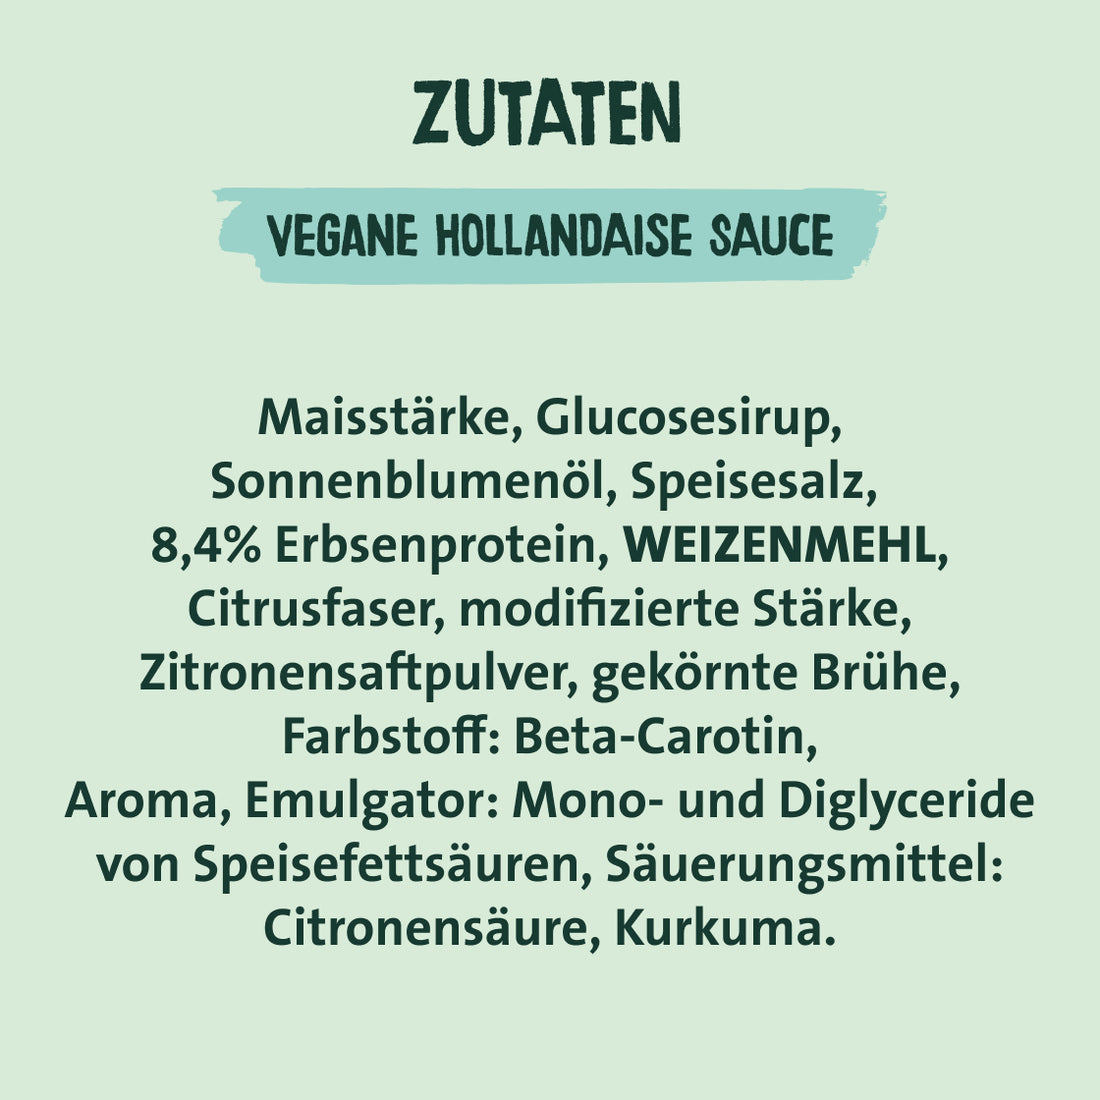 Vegan hollandaise sauce 